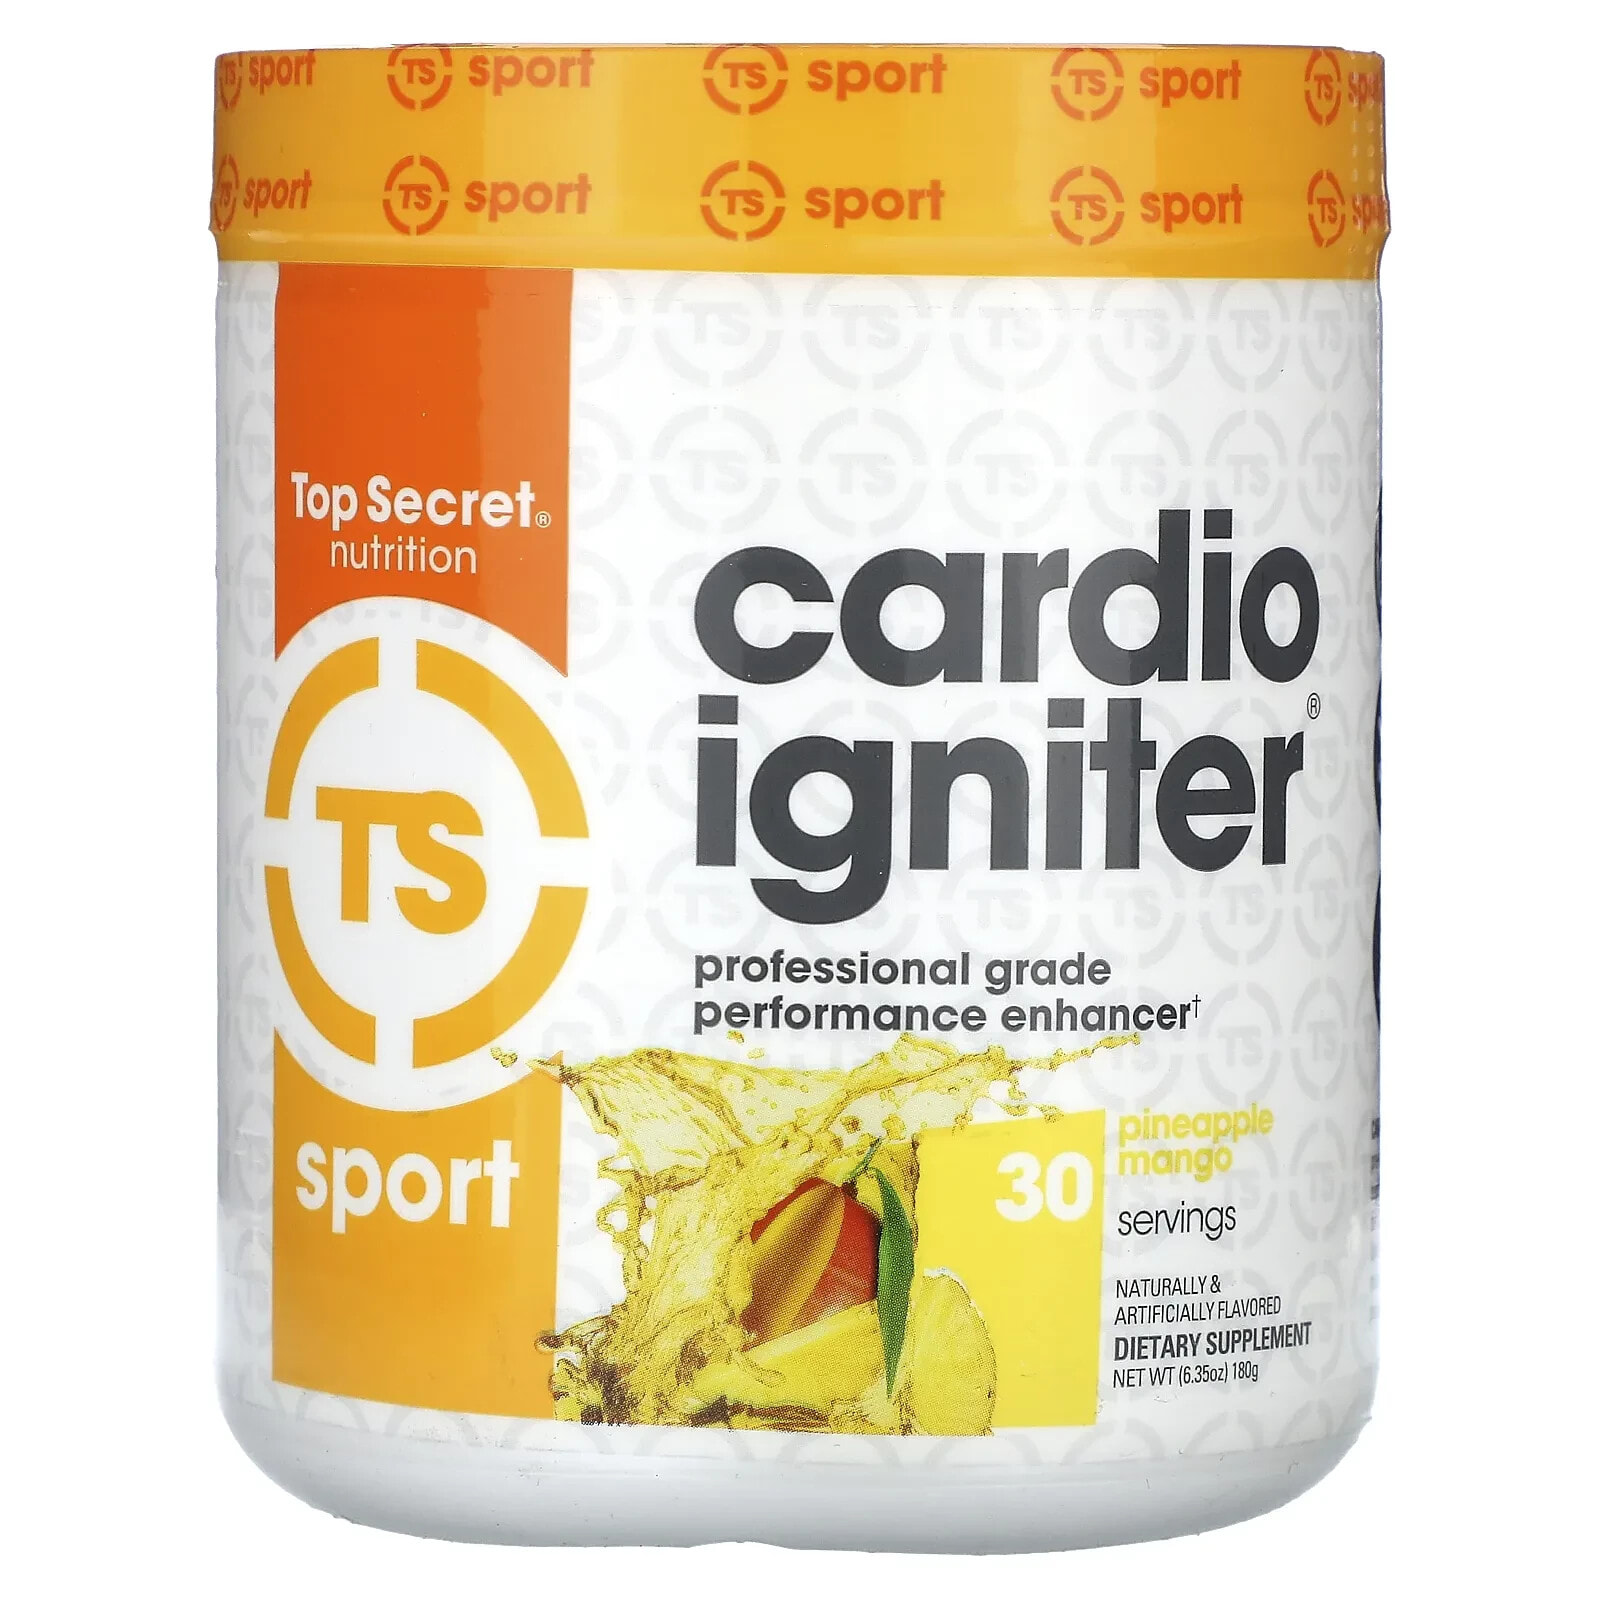 Sport, Cardio Igniter, Professional Grade Performance Enhancer, Pineapple Mango, 6.35 oz (180 g)